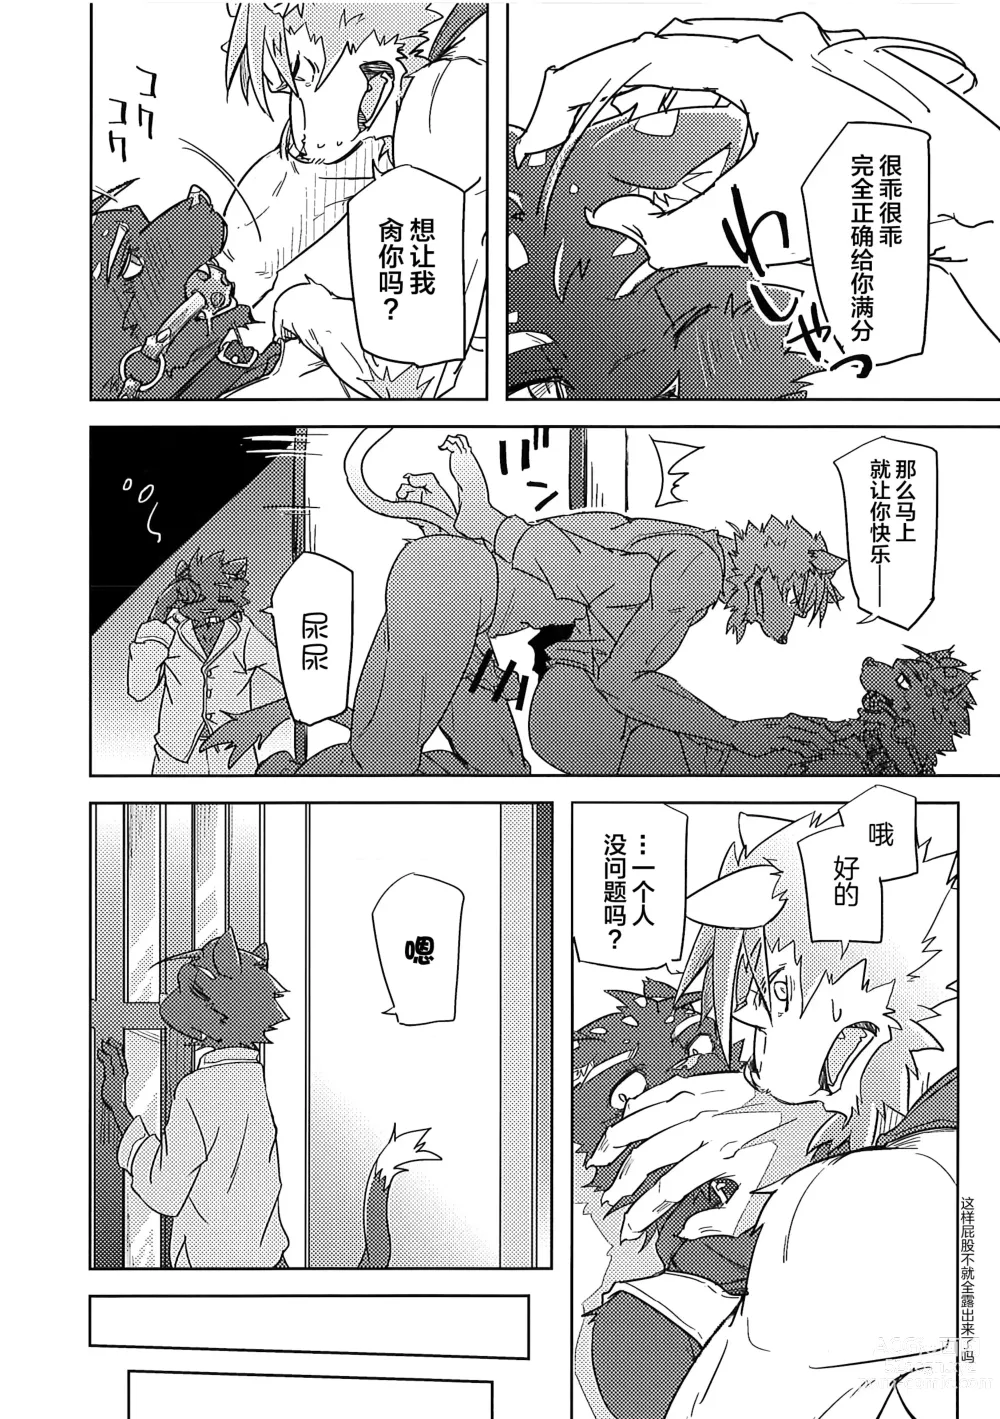 Page 17 of doujinshi Crazy Waltz